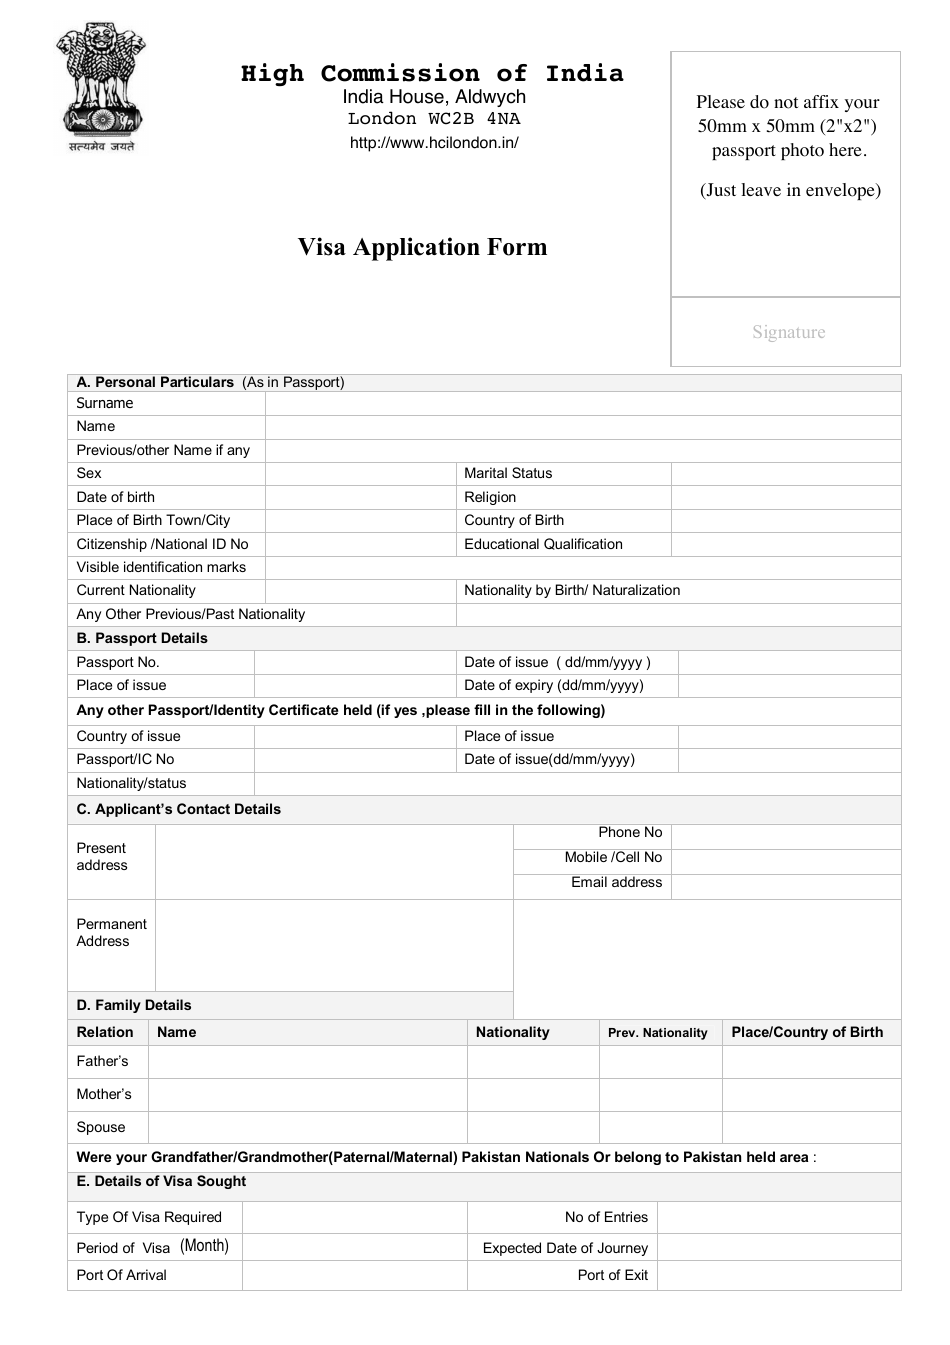 united-kingdom-indian-visa-application-form-high-free-nude-porn-photos